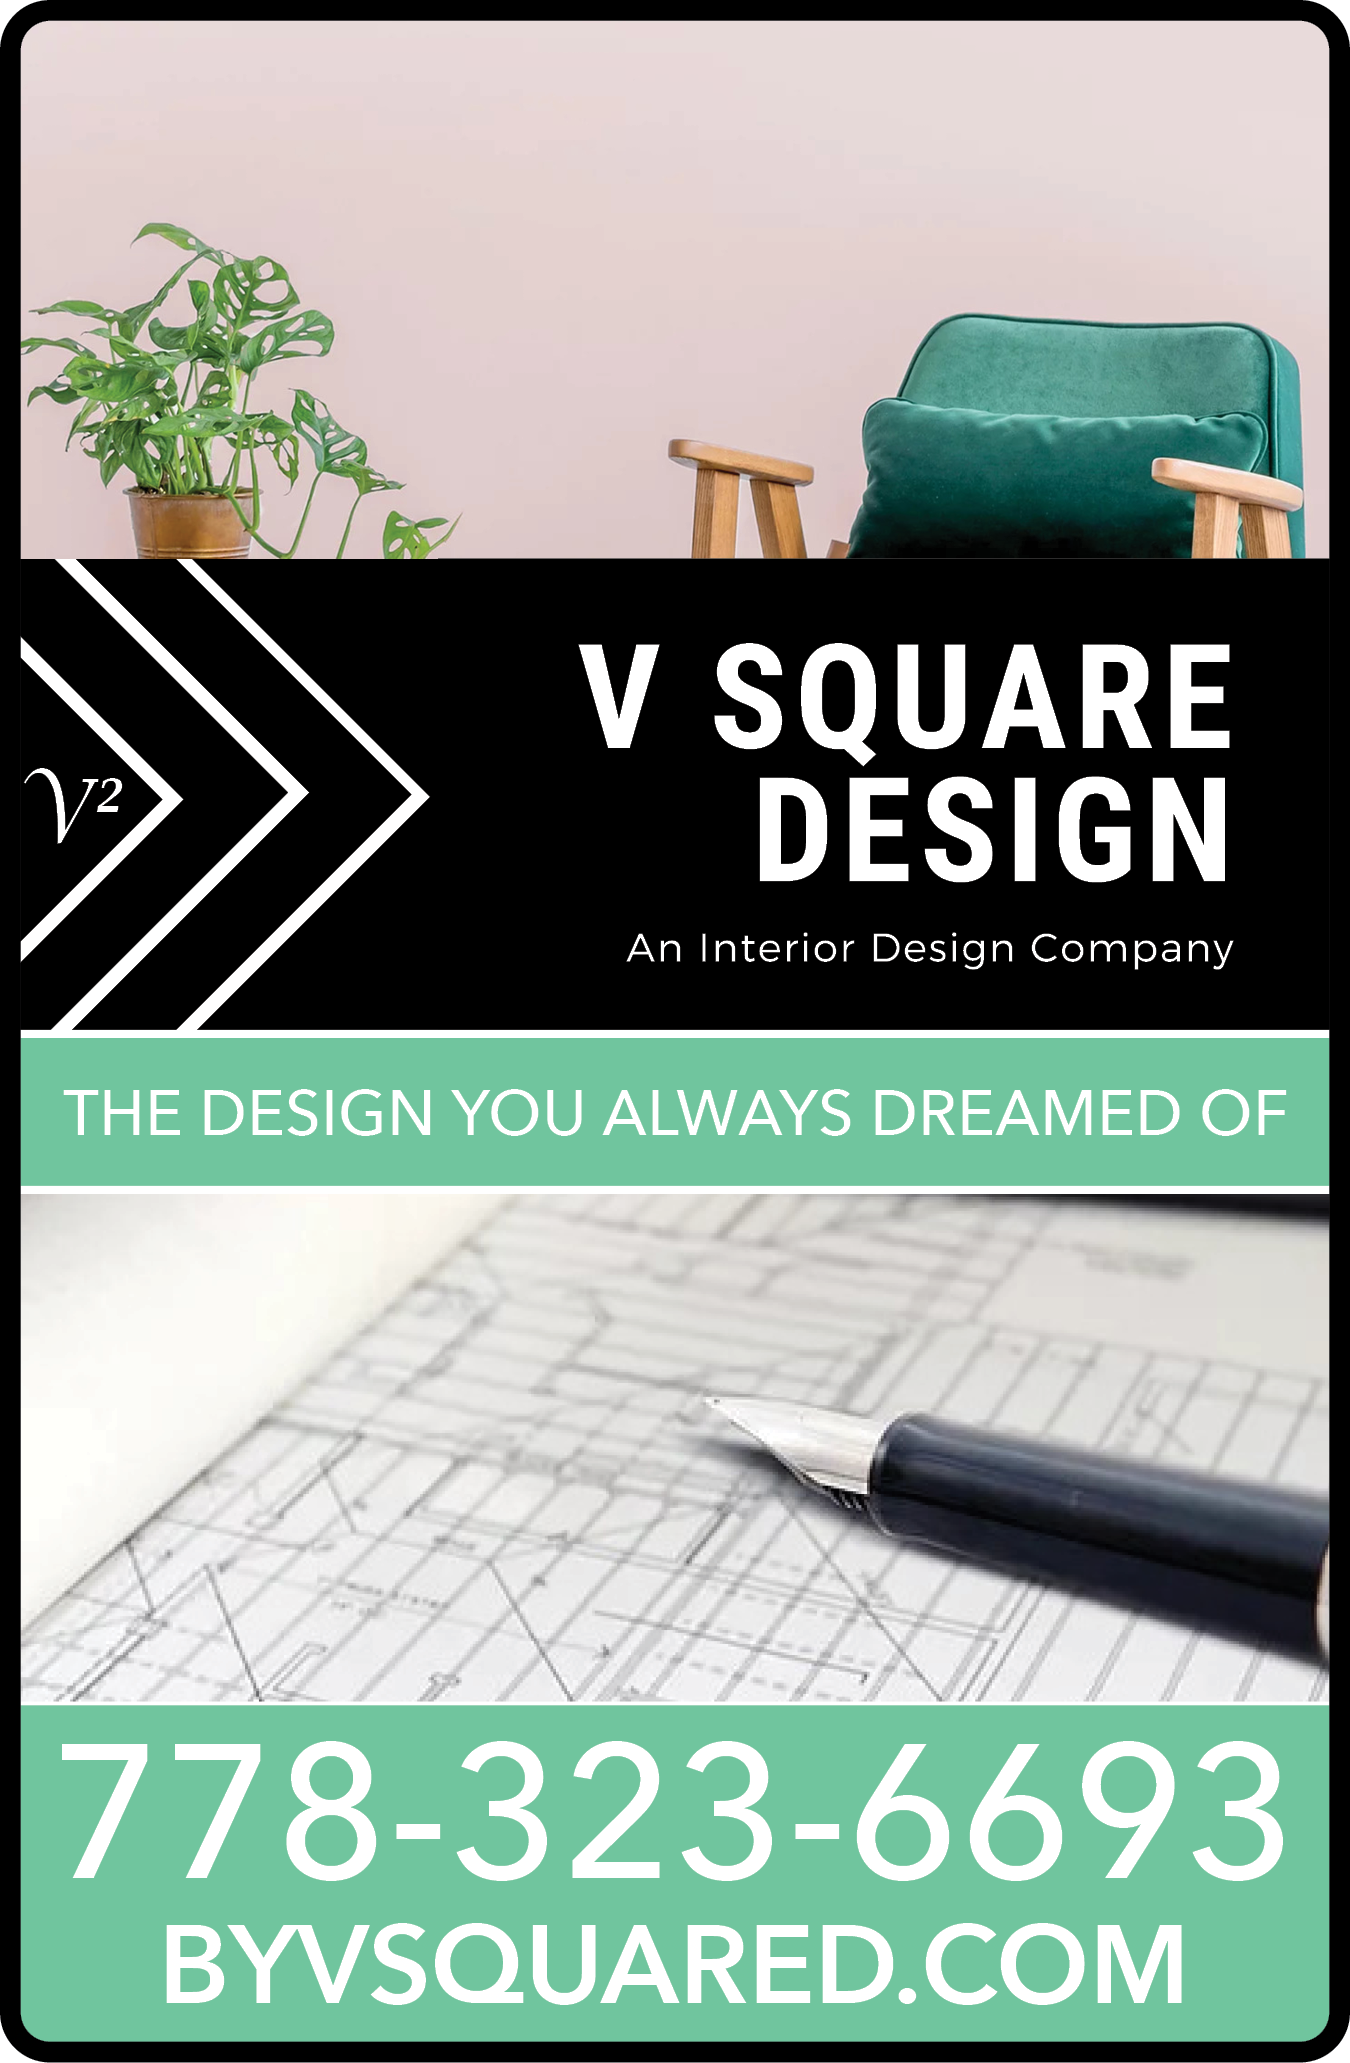 V Square Design